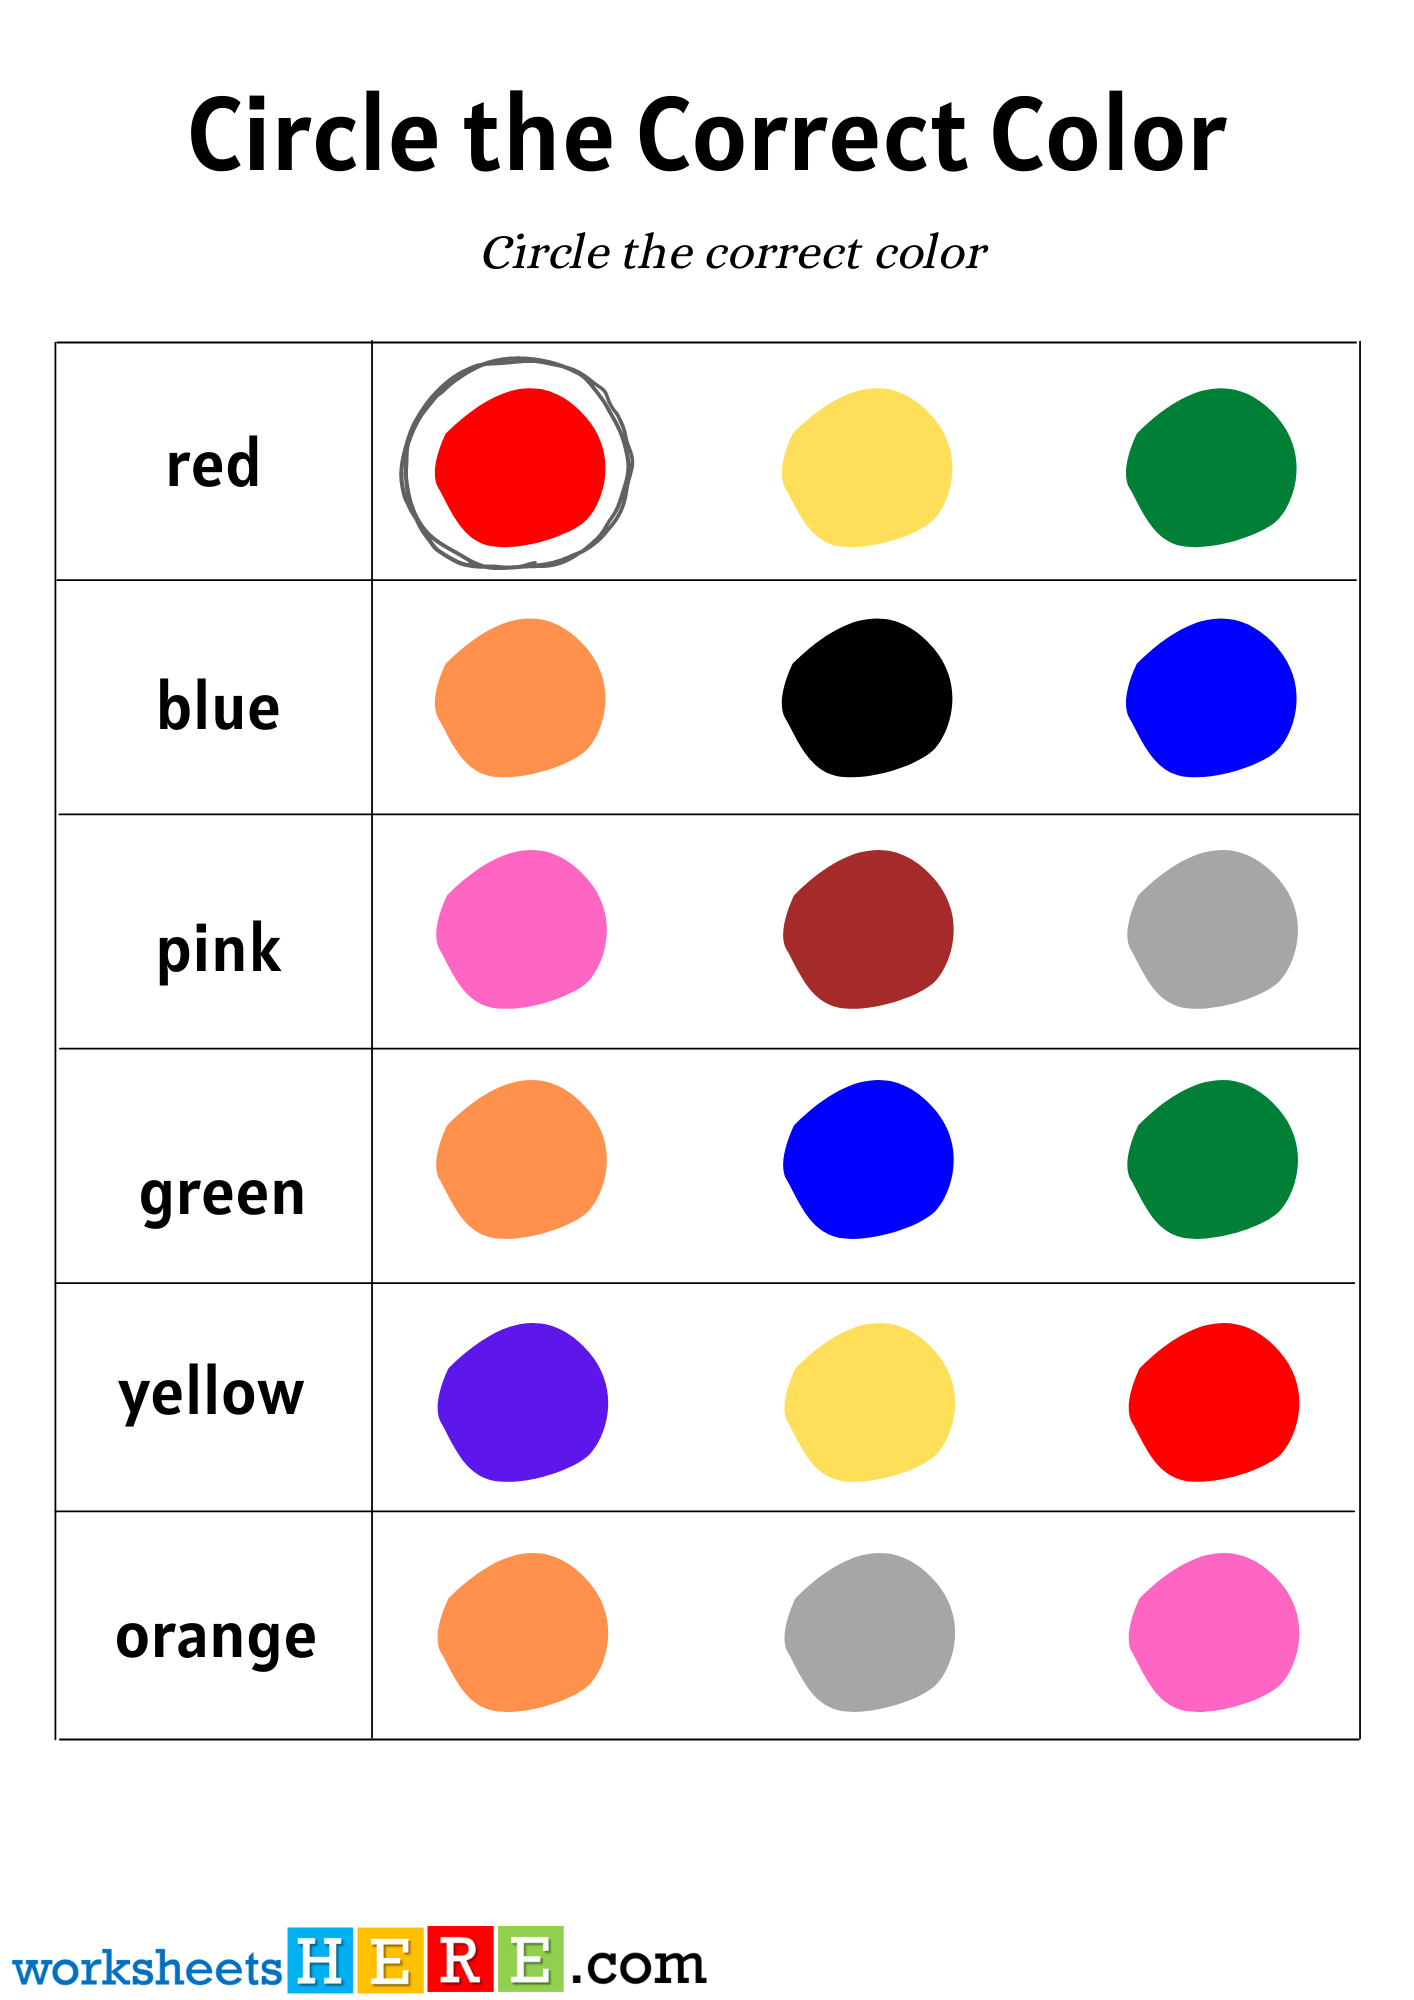 Circle The Correct Color Activity Worksheets for Kids, Kindergarten Colors Worksheets